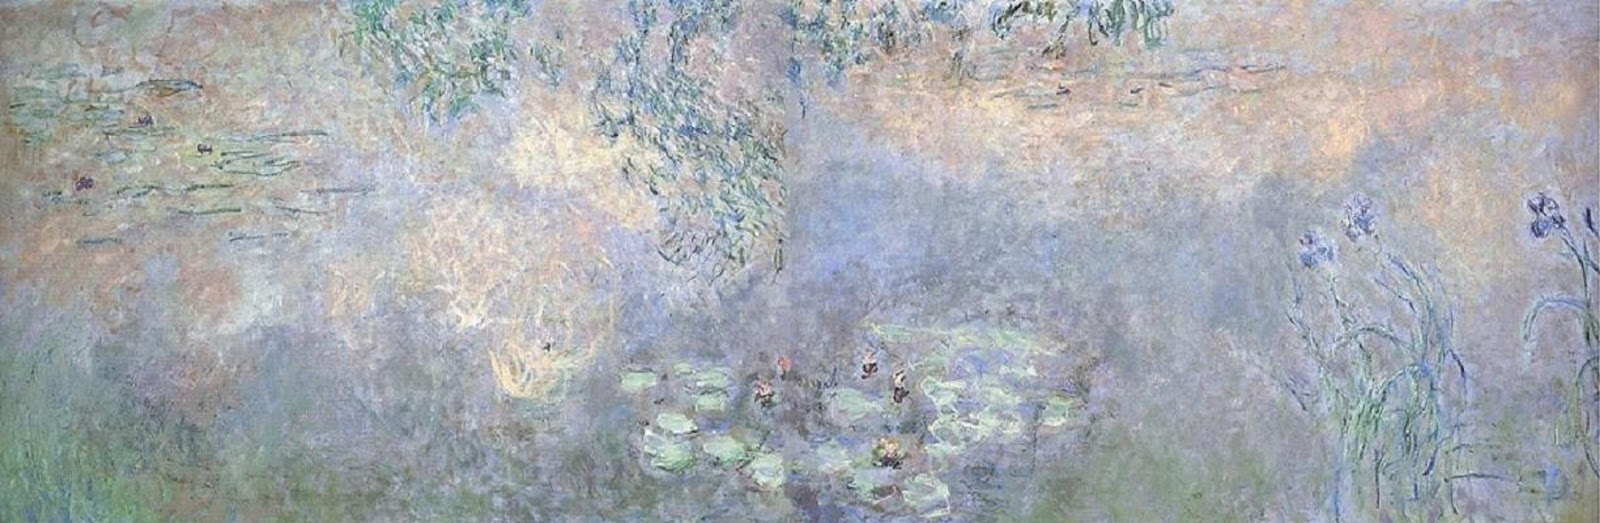 Claude+Monet-1840-1926 (936).jpg